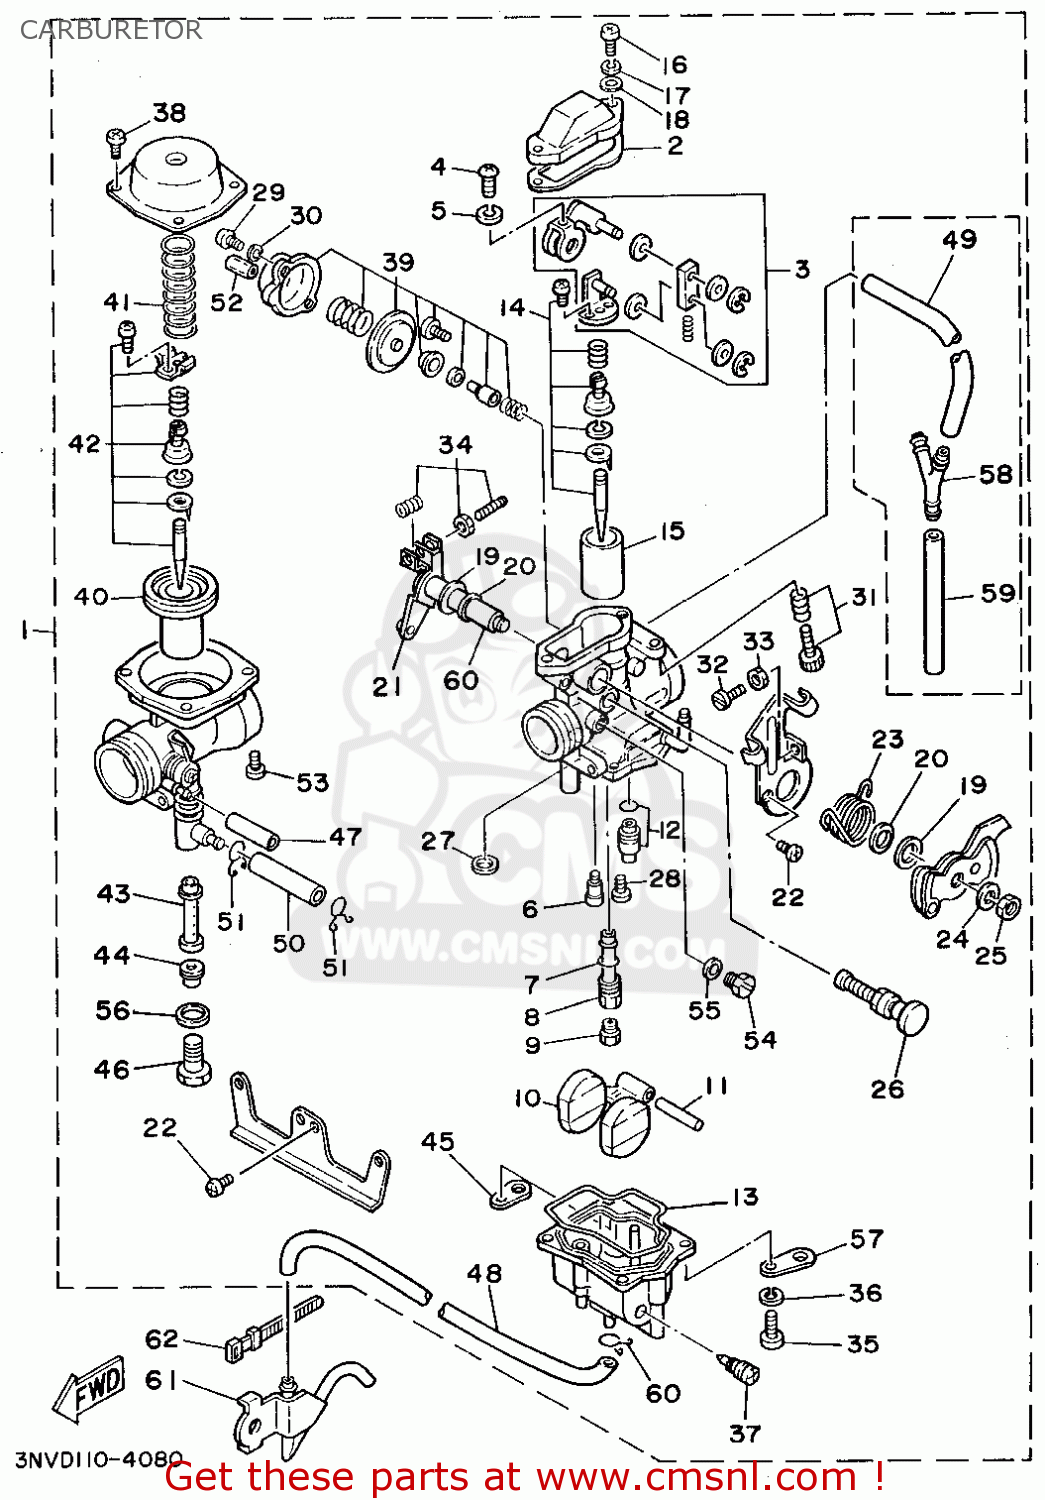 Wiring Diagram For Yamaha Big Bear 400 - Wiring Diagram For Yamaha Big